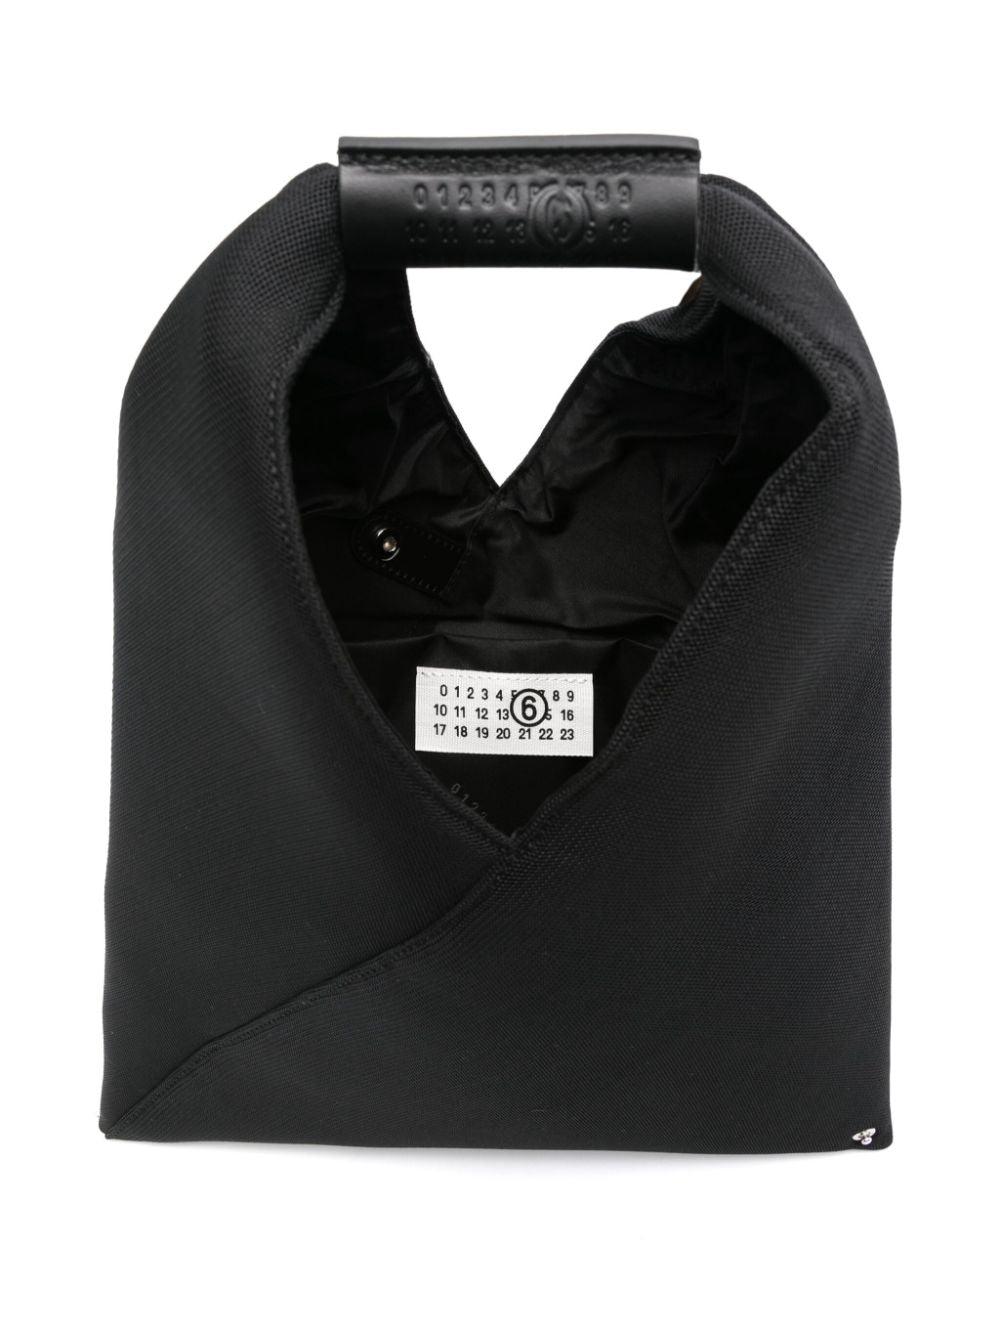 Black bag for girls with logo